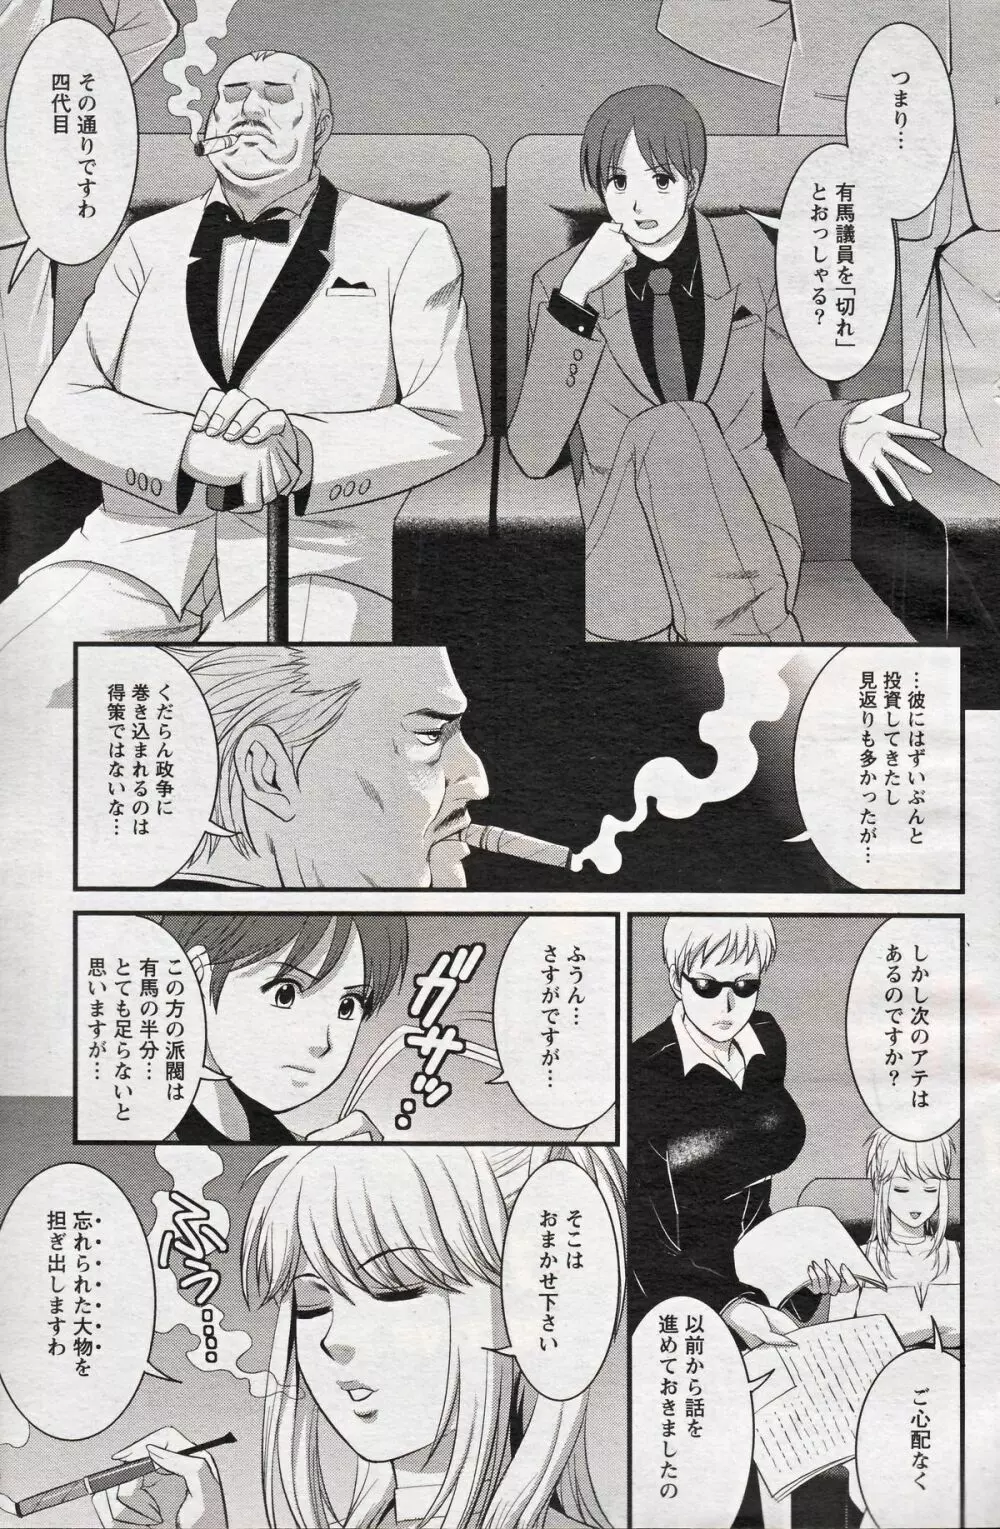 Haken no Muuko-san 19 7ページ